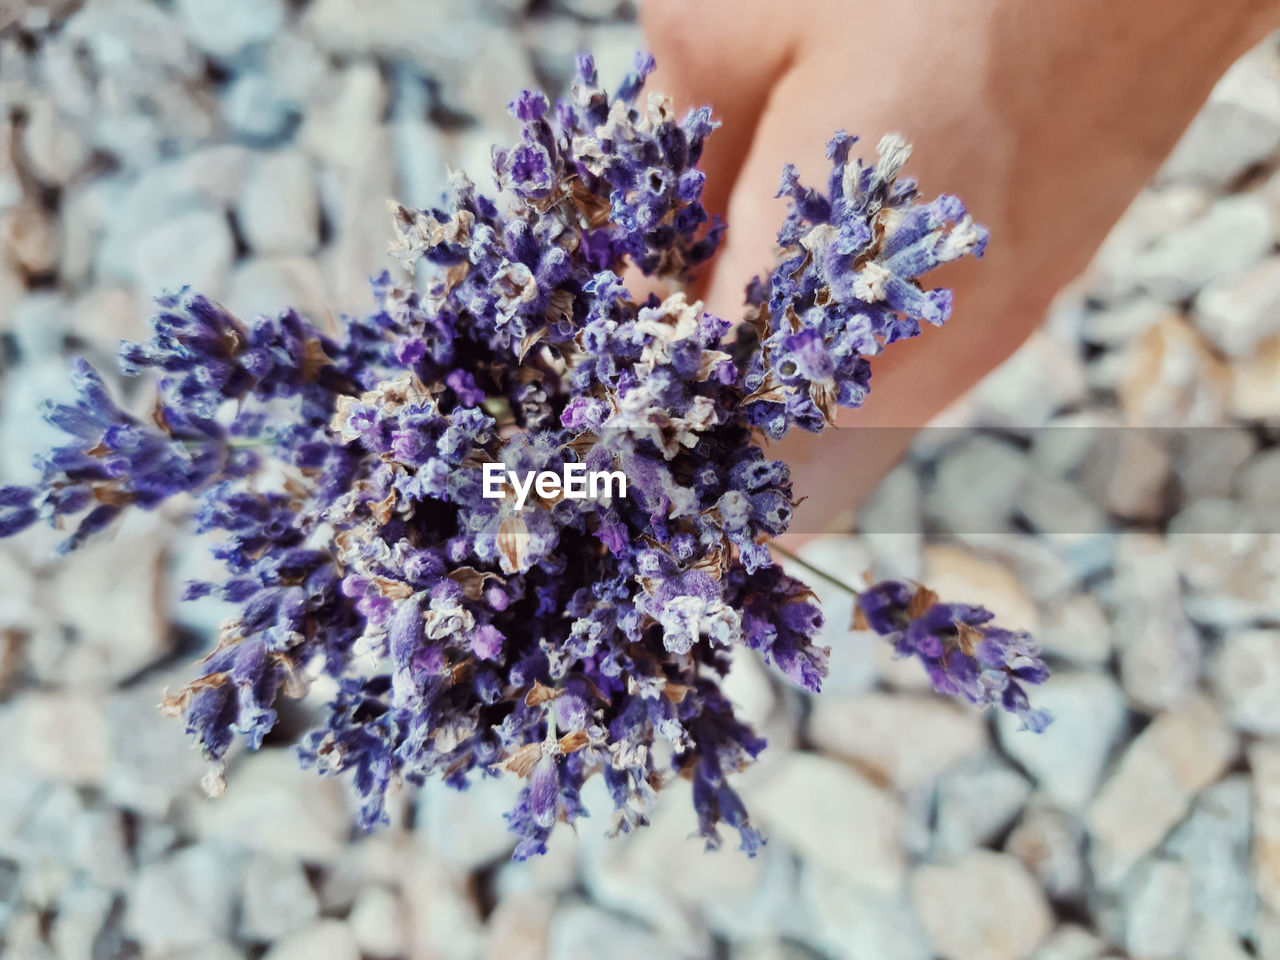 Midsummer lavender harvest - embroidery, journaling, gardening